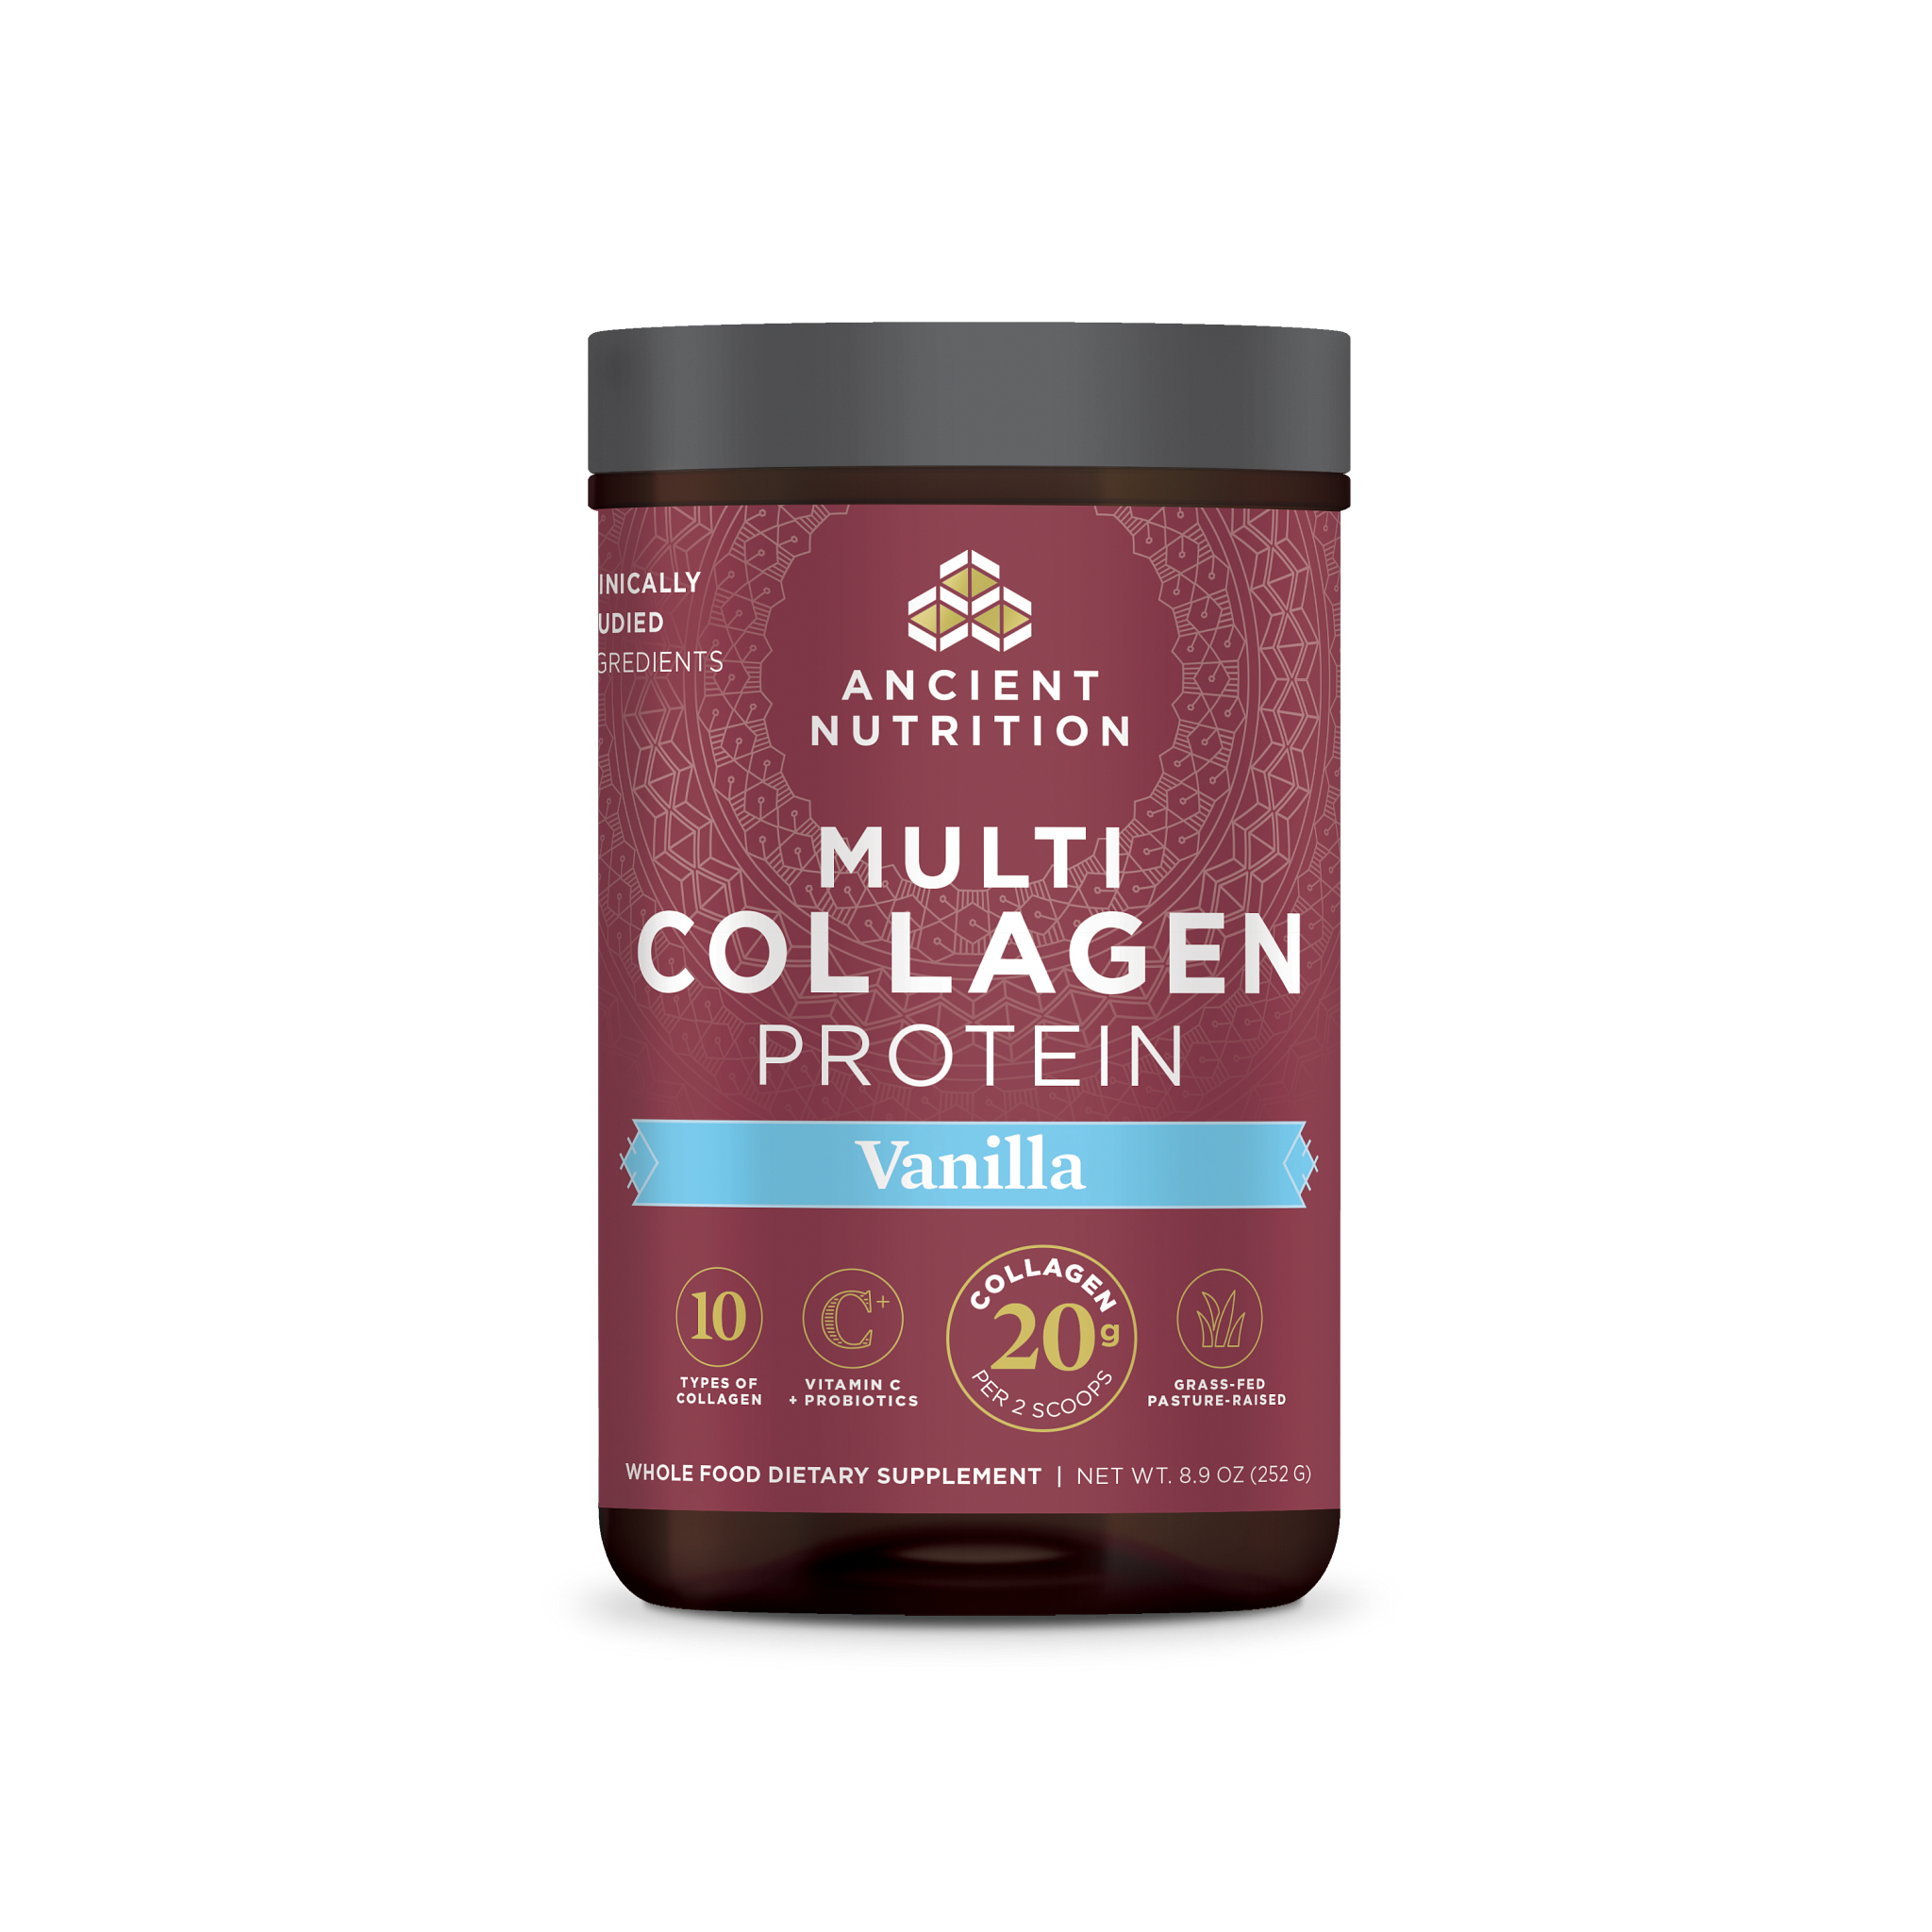 multi collagen protein vanilla front of bottle